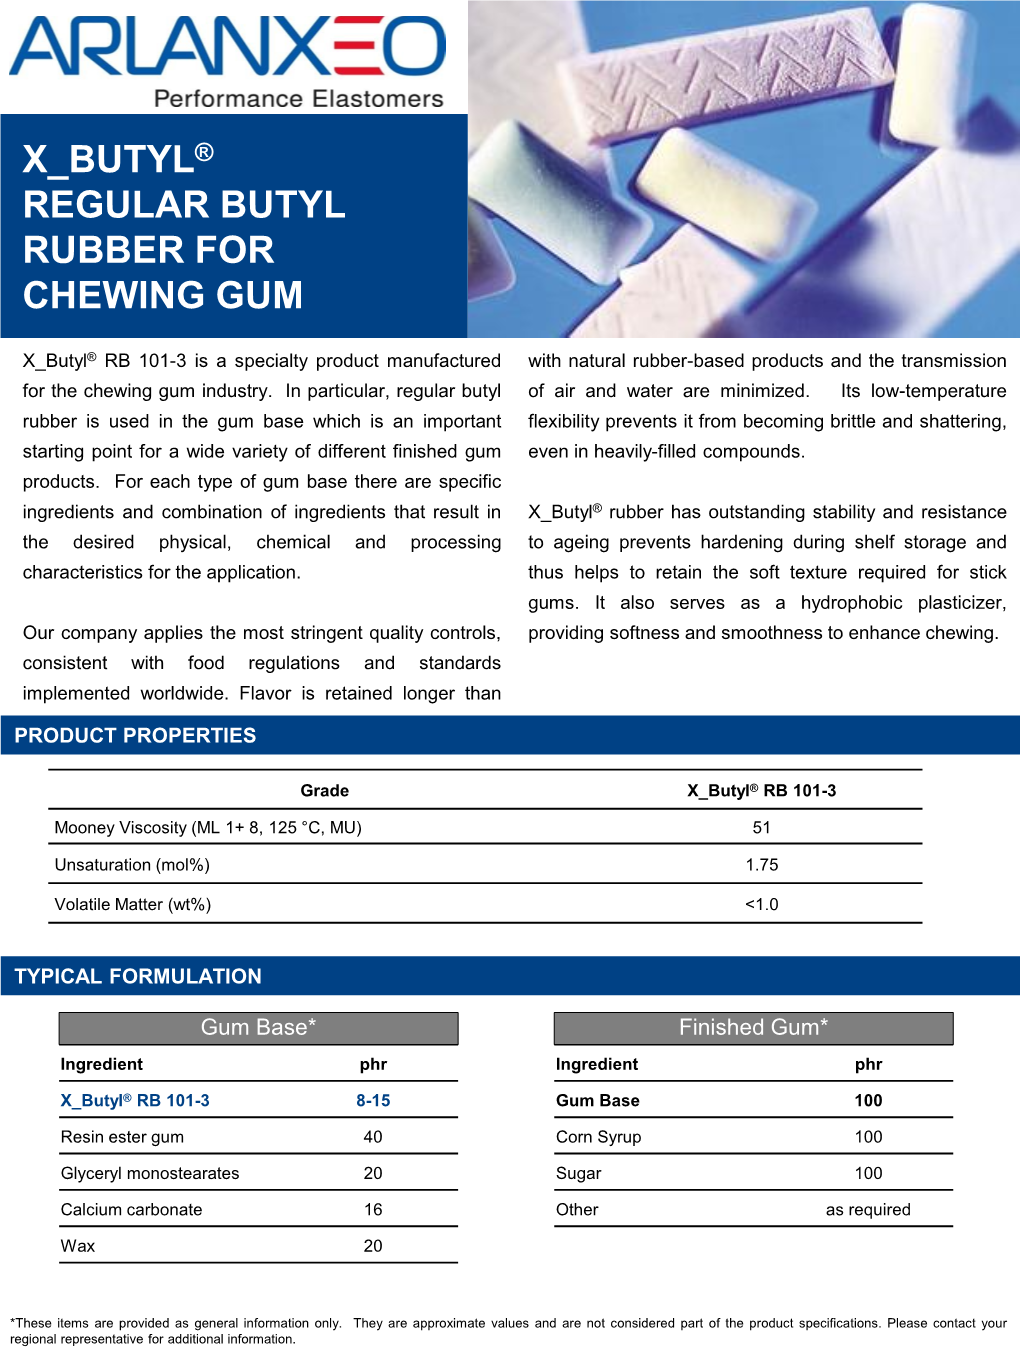 X Butyl® Regular Butyl Rubber for Chewing Gum